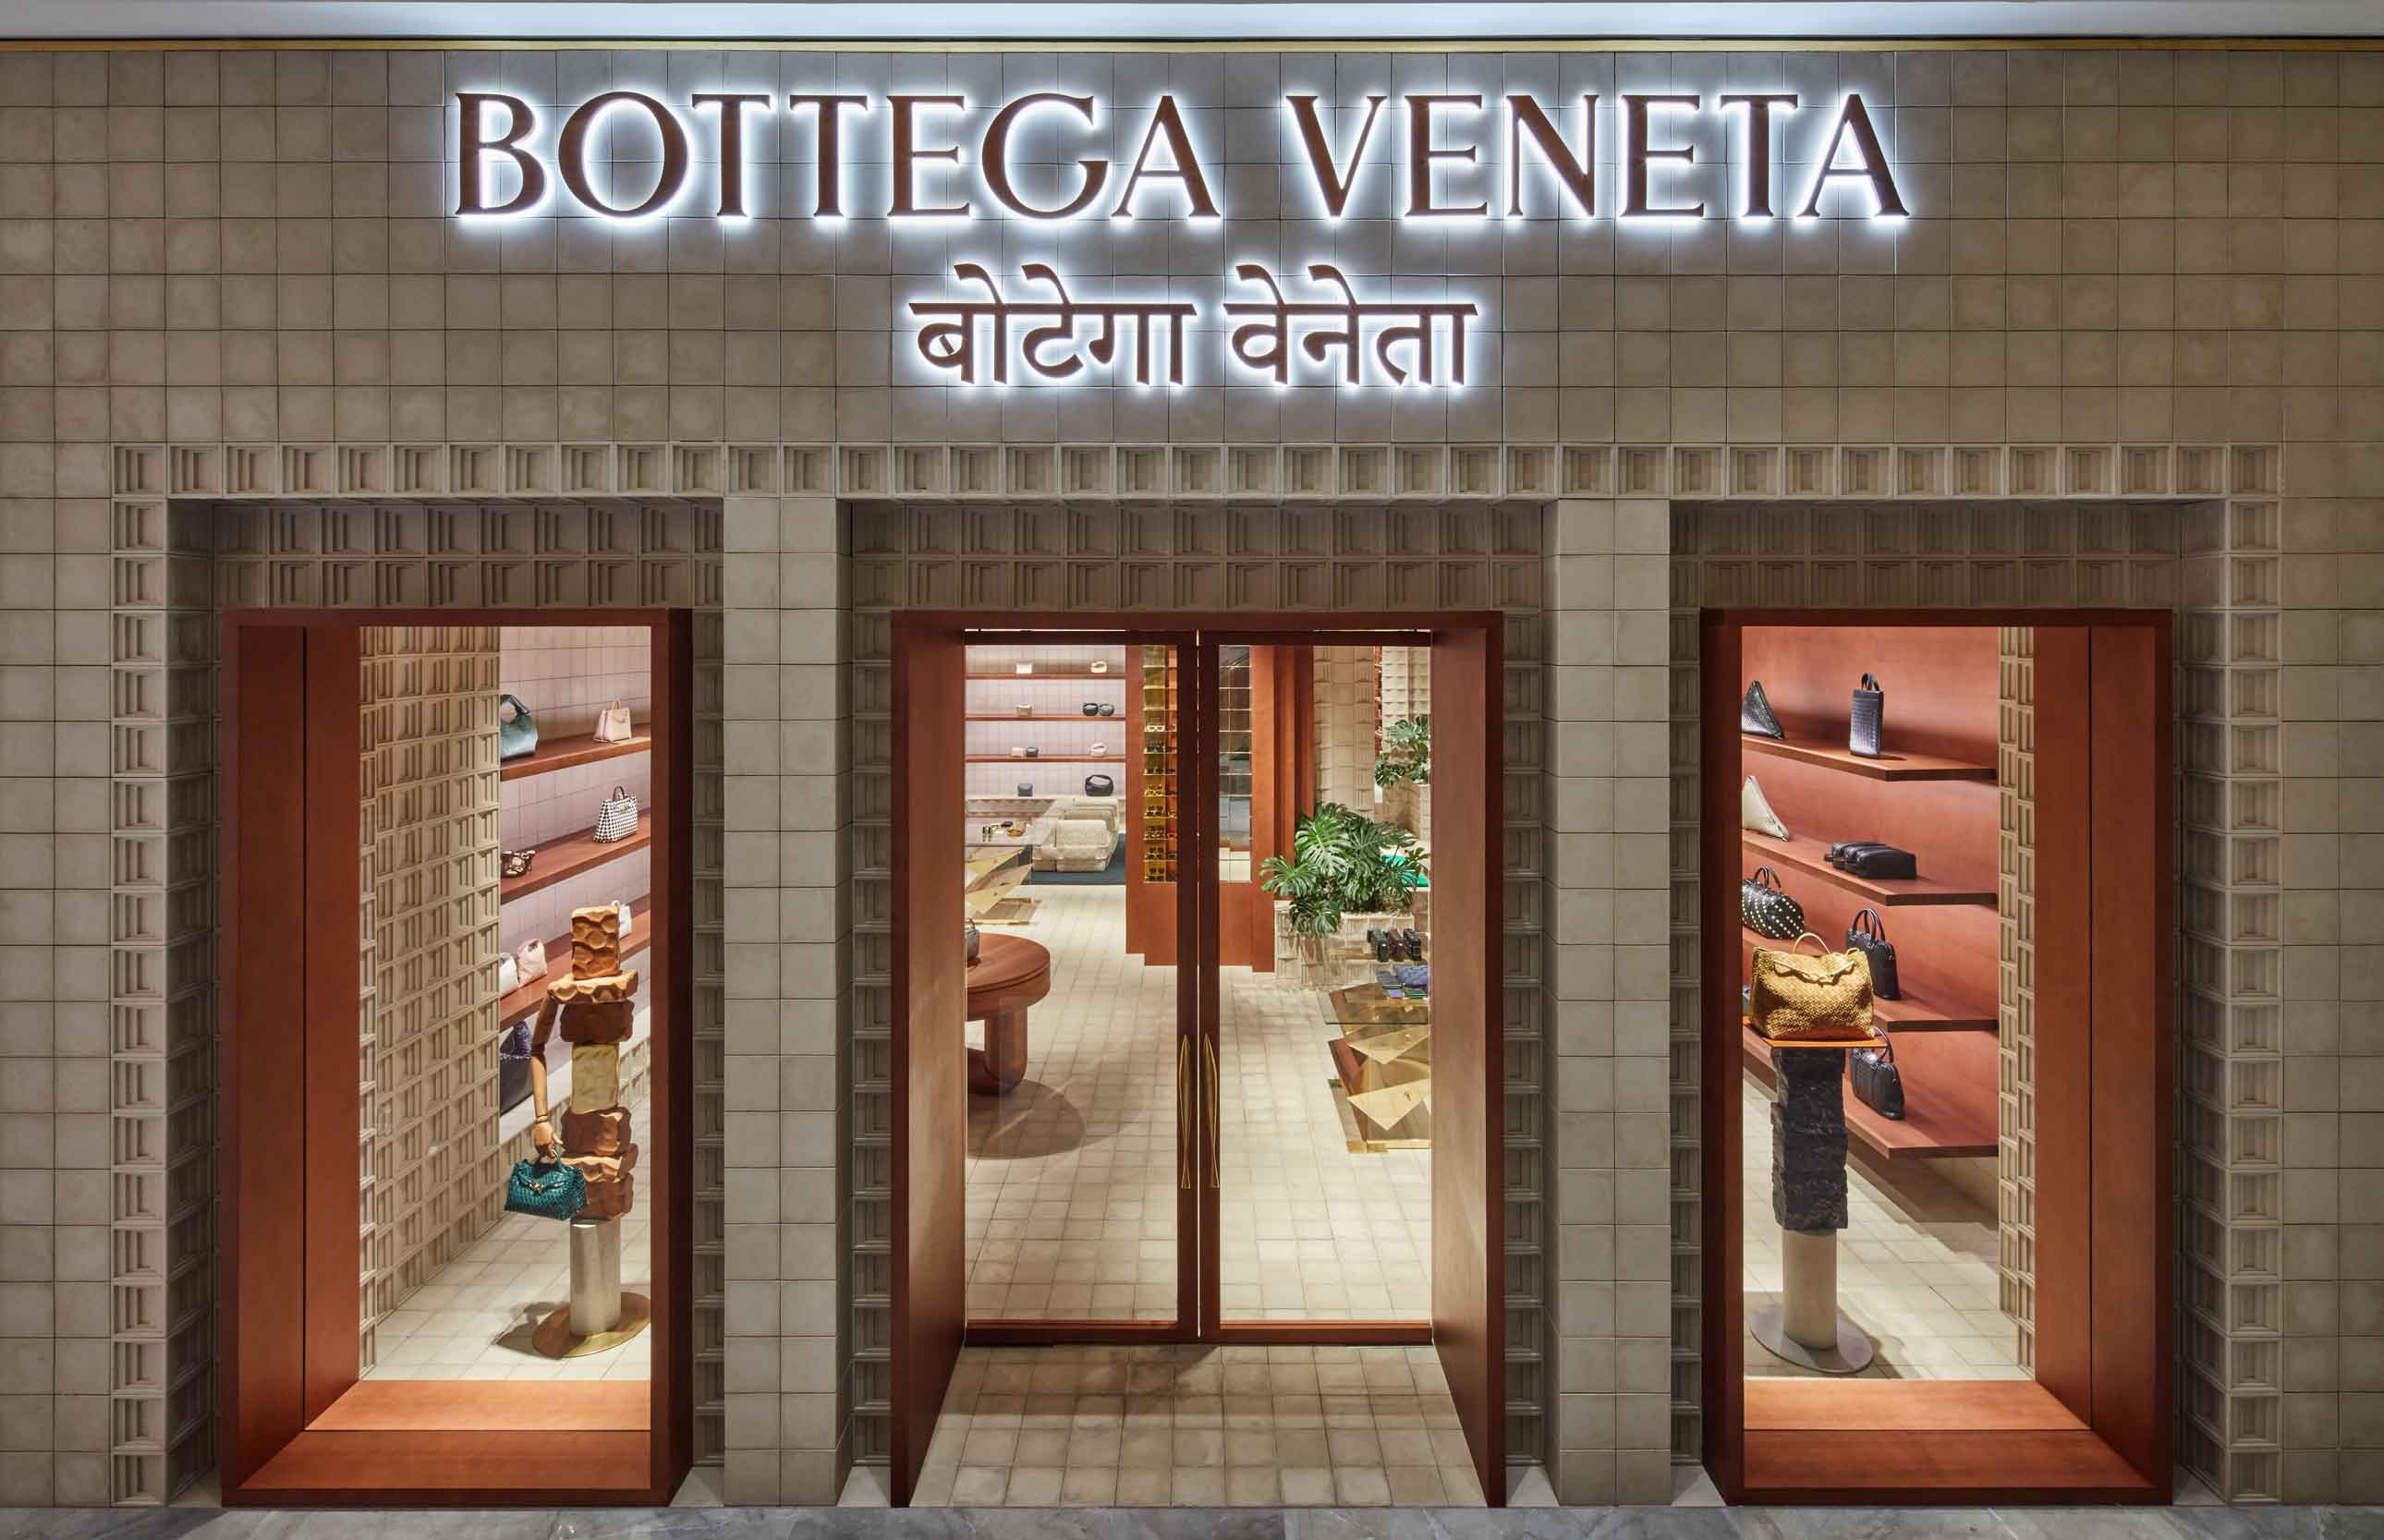 Bottega Veneta’s new Mumbai store